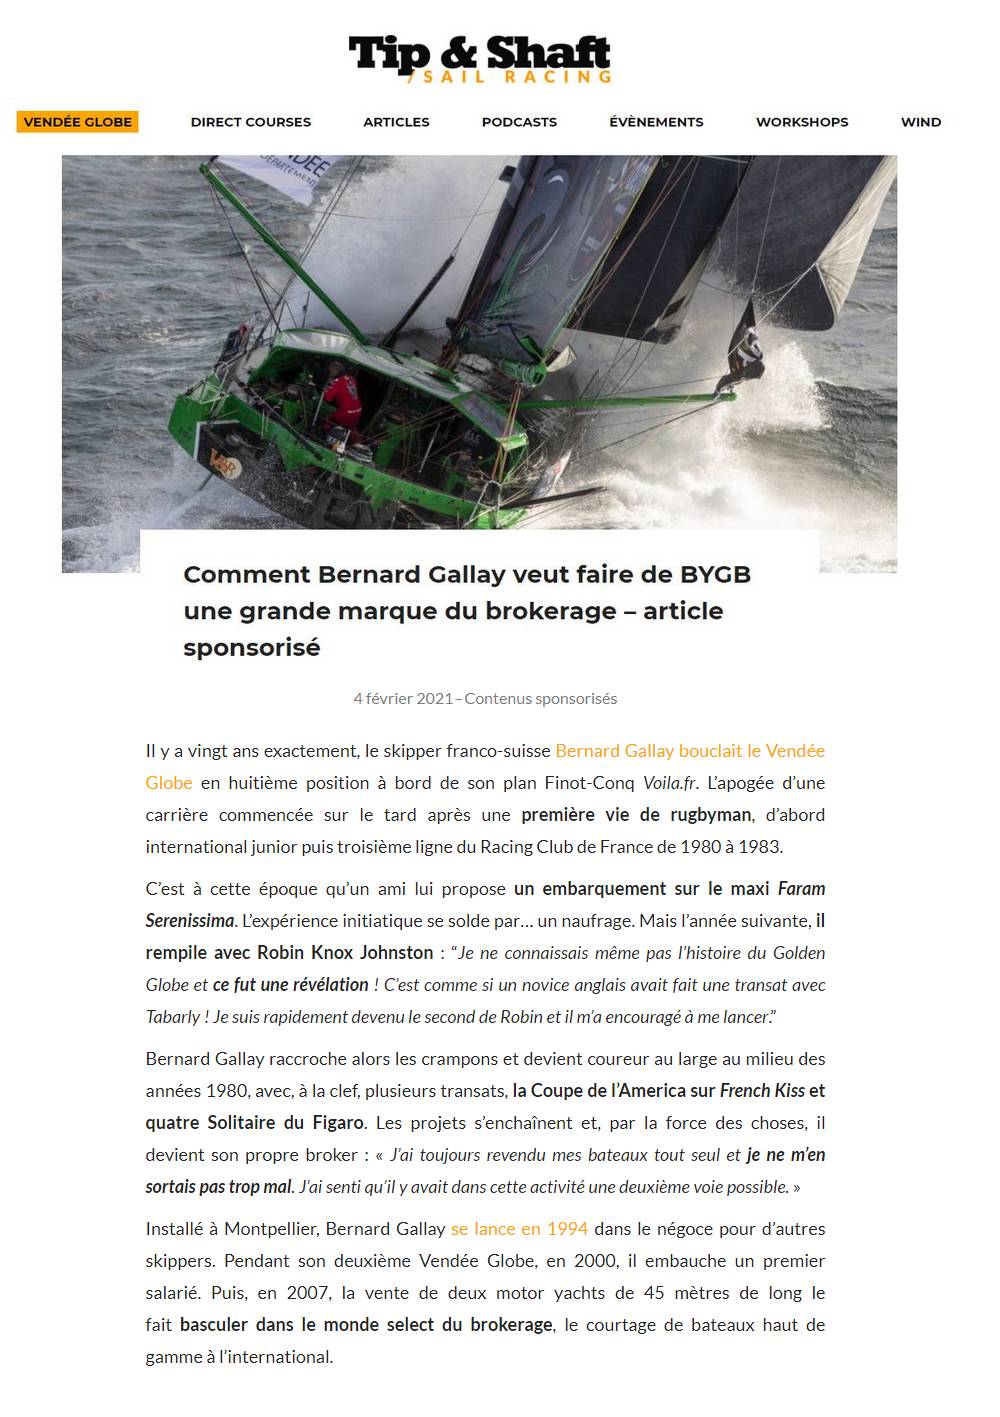 Tip & Shaft : Bernard Gallay et le Vendée Globe